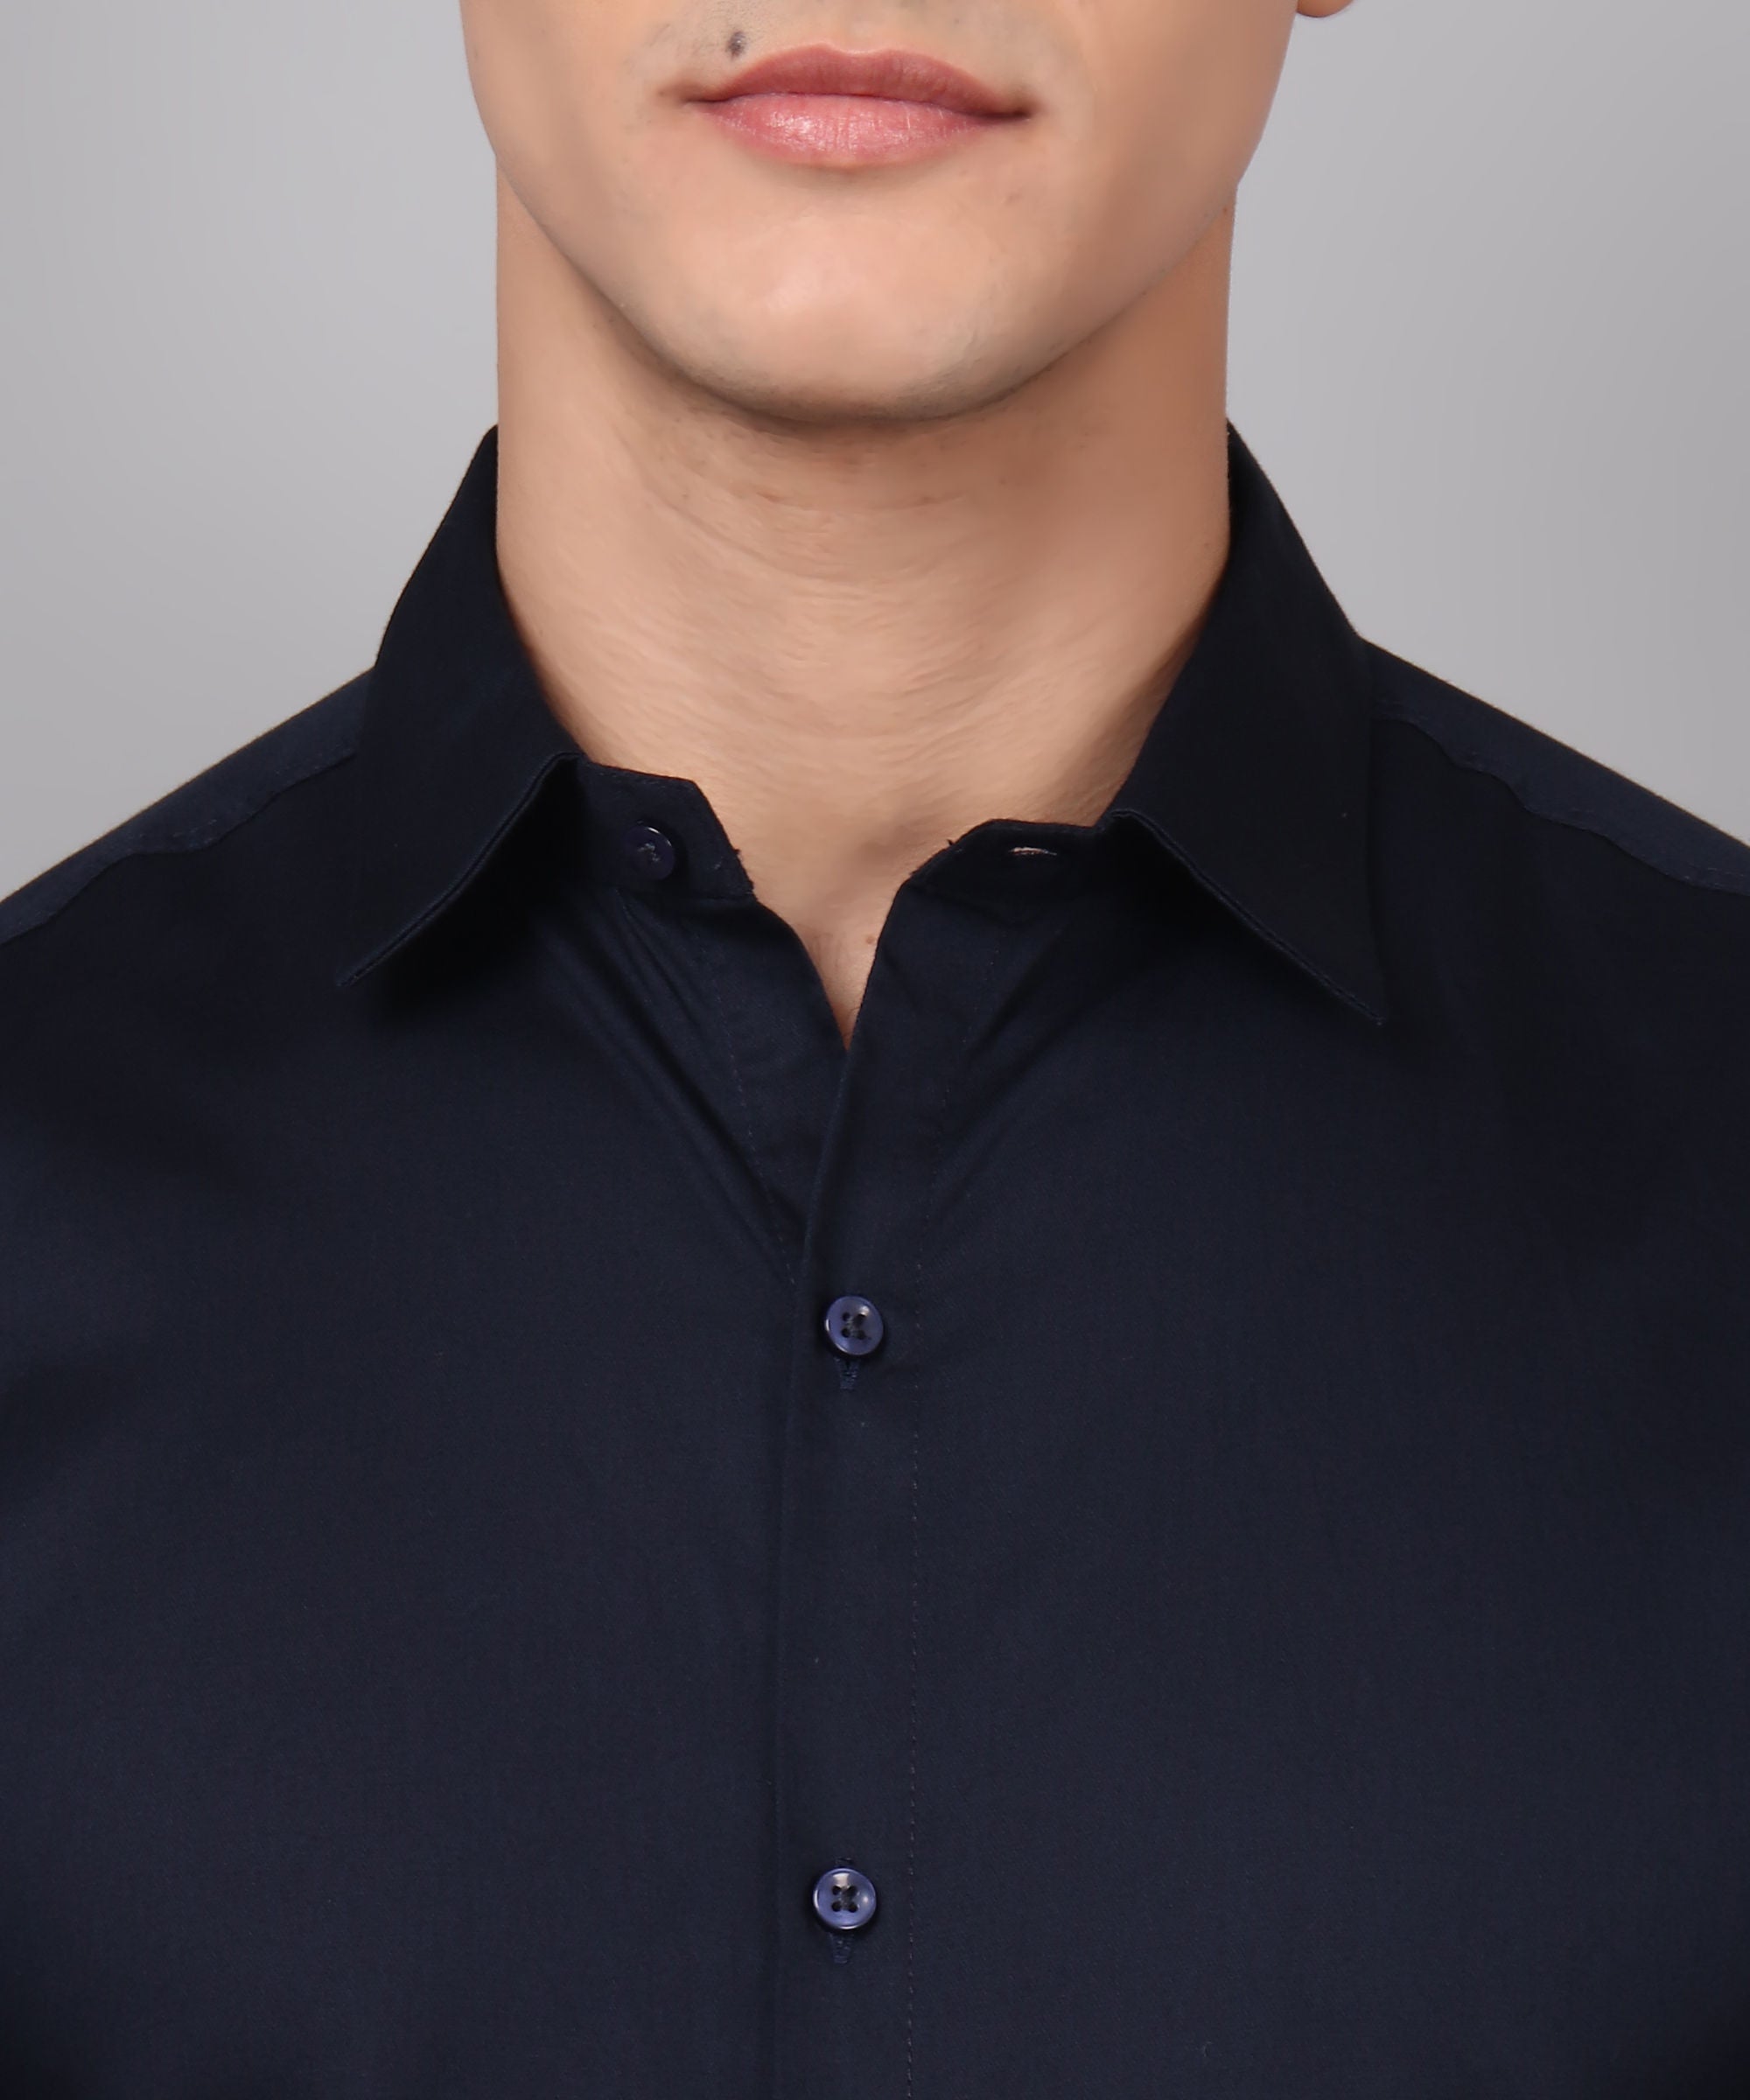 Exclusive TryBuy Premium Navy Blue Dress Shirt for Men